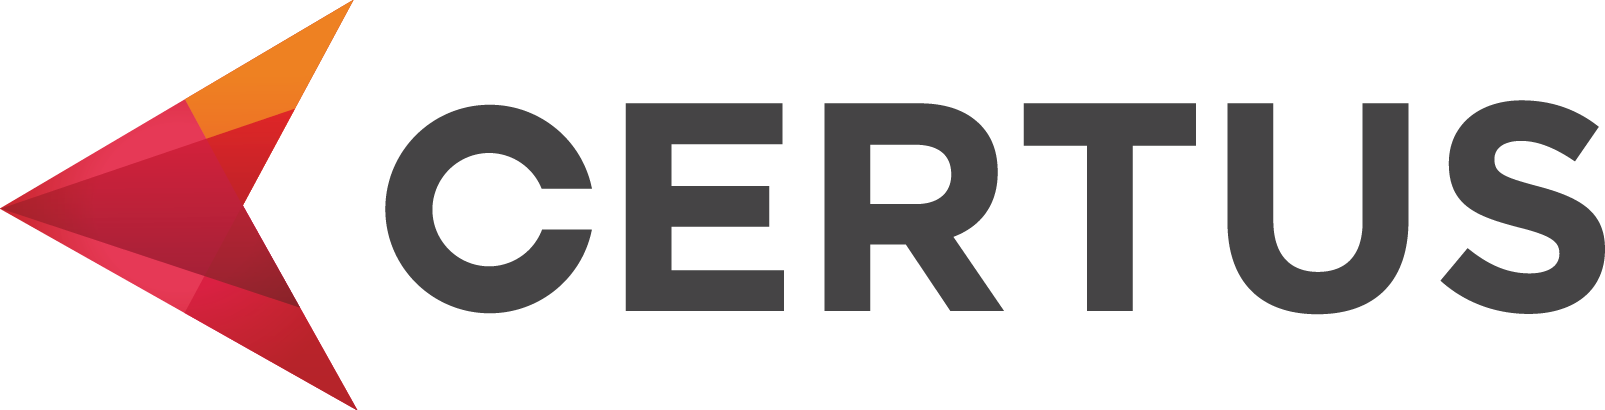 Certus Logo FINAL